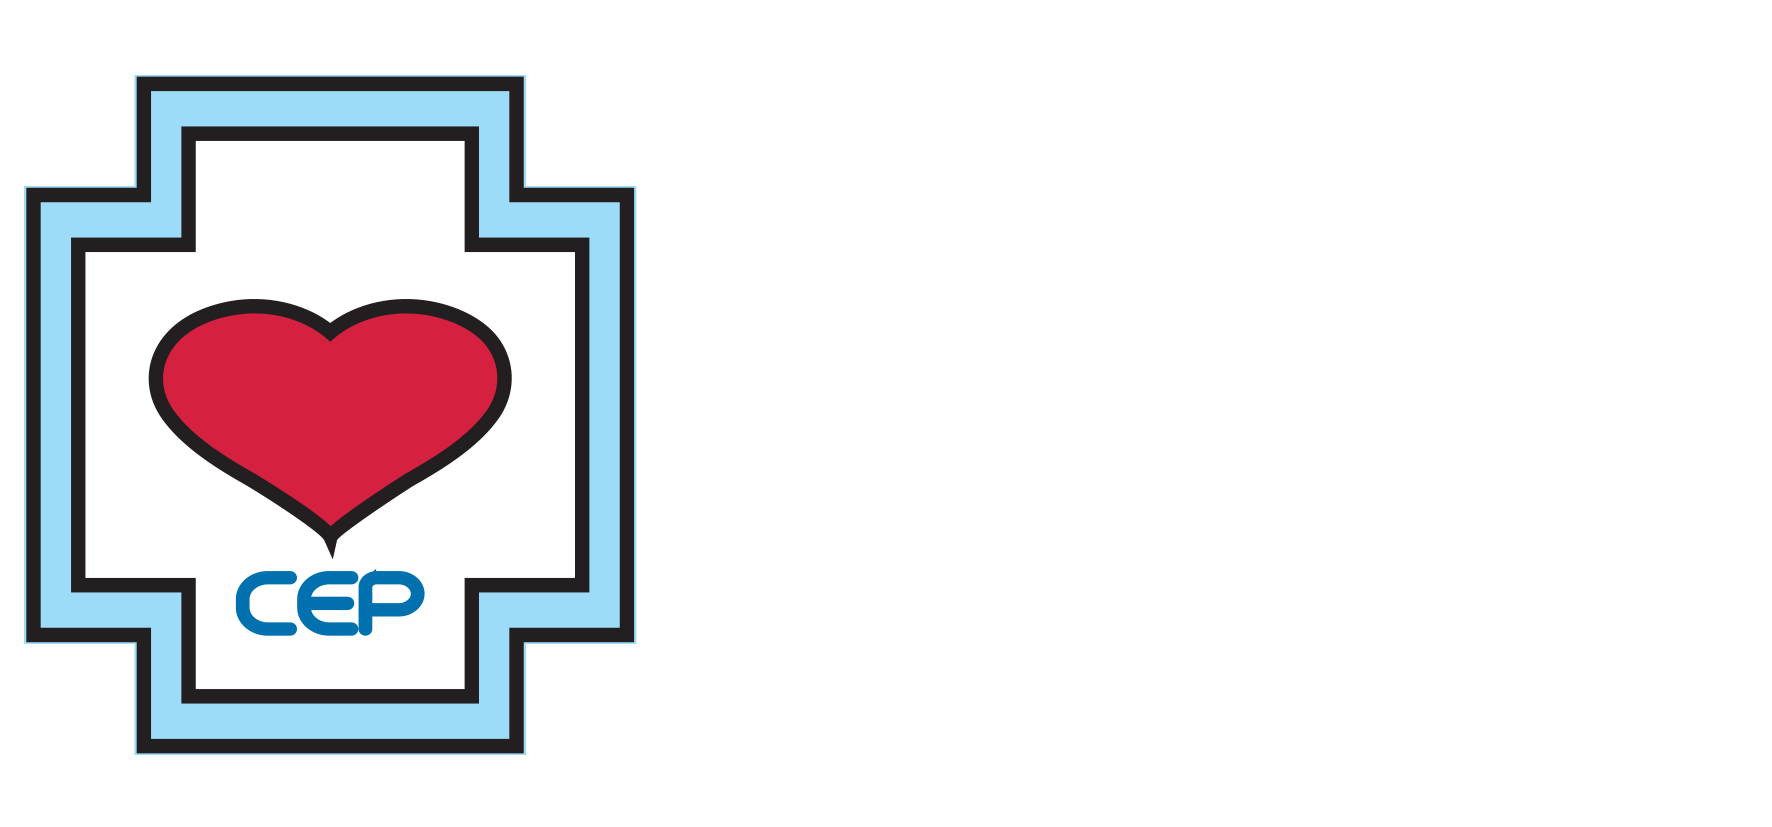 Couple Empowerment Programme